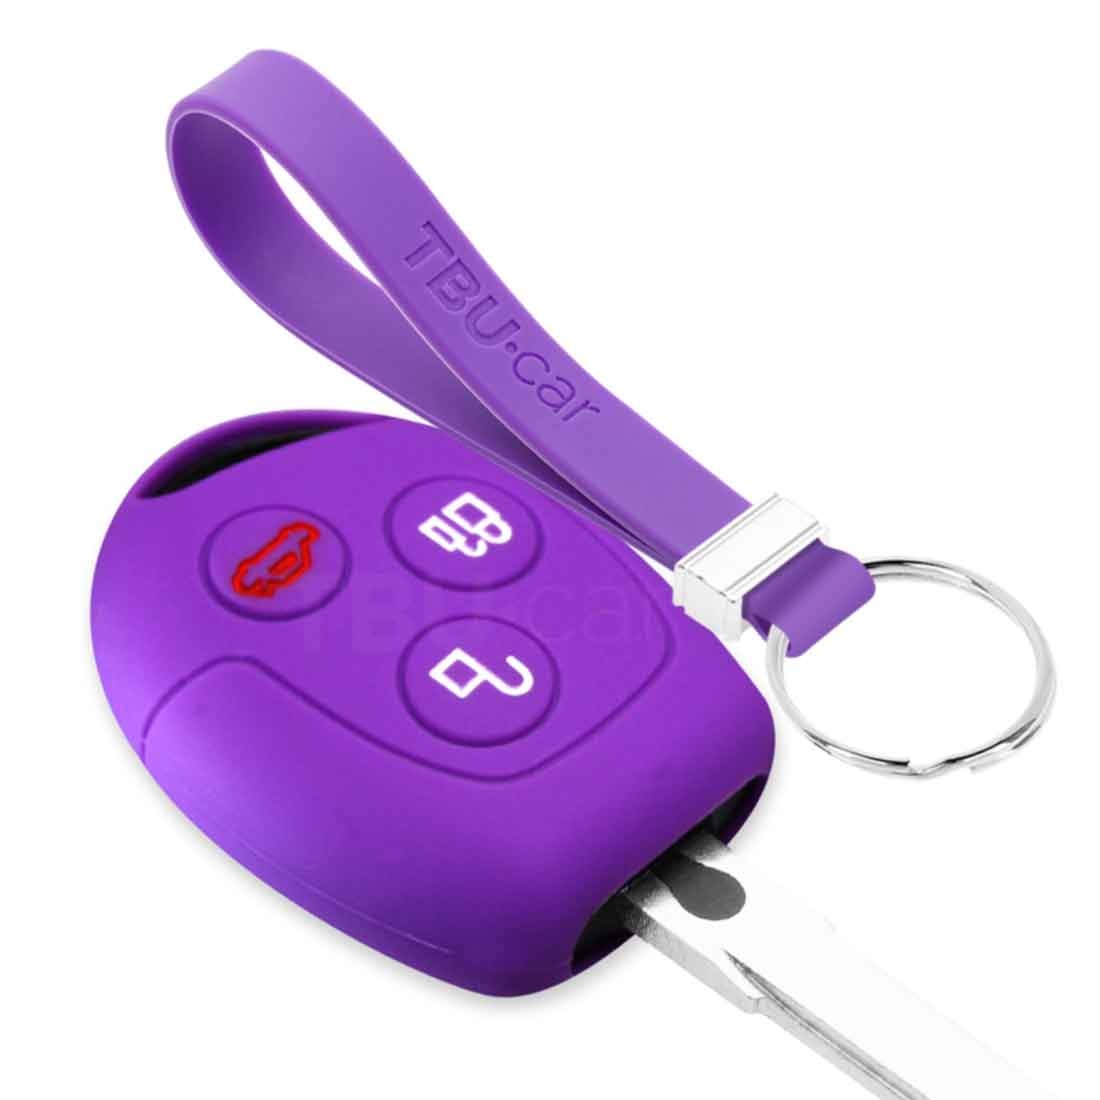 TBU car TBU car Autoschlüssel Hülle kompatibel mit Ford 3 Tasten - Schutzhülle aus Silikon - Auto Schlüsselhülle Cover in Violett